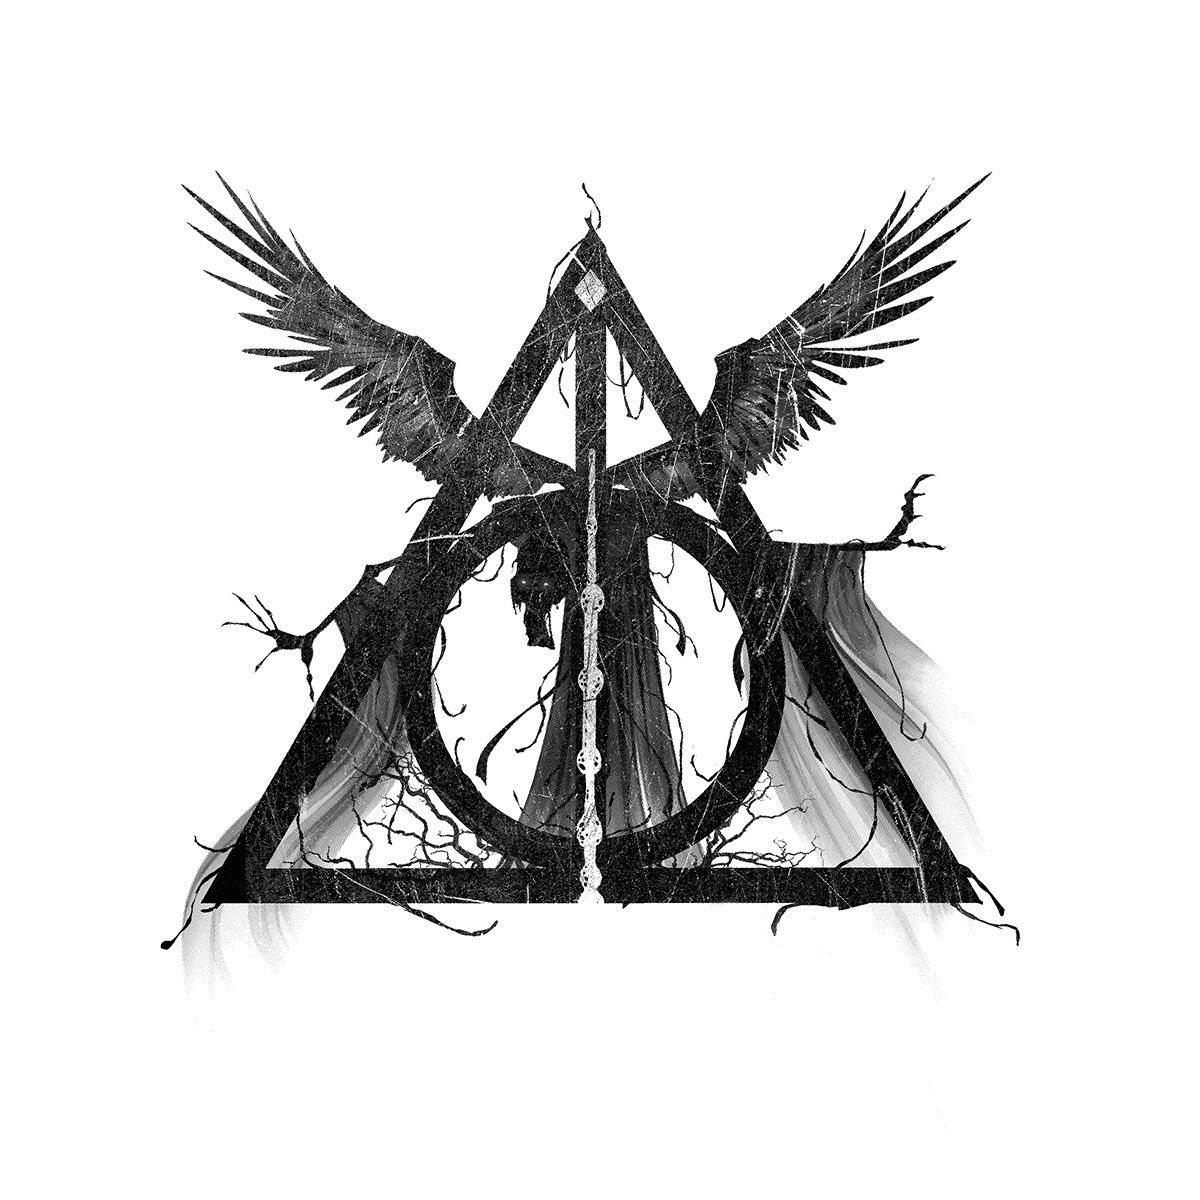 Deathly Hallows symbols